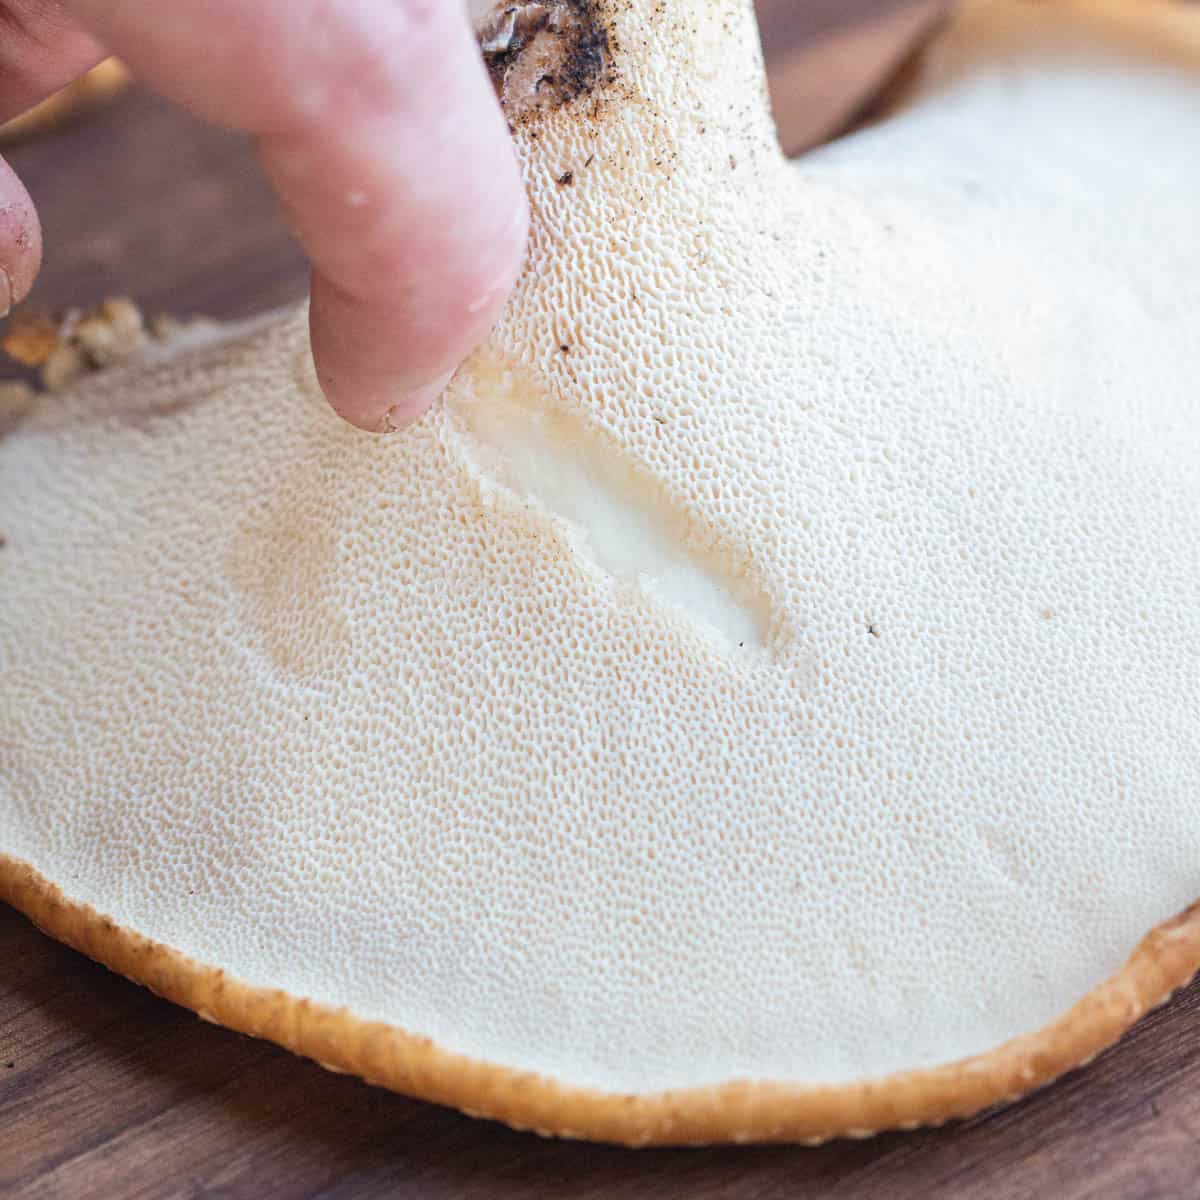 scraping pores off a mushroom with a fingernail